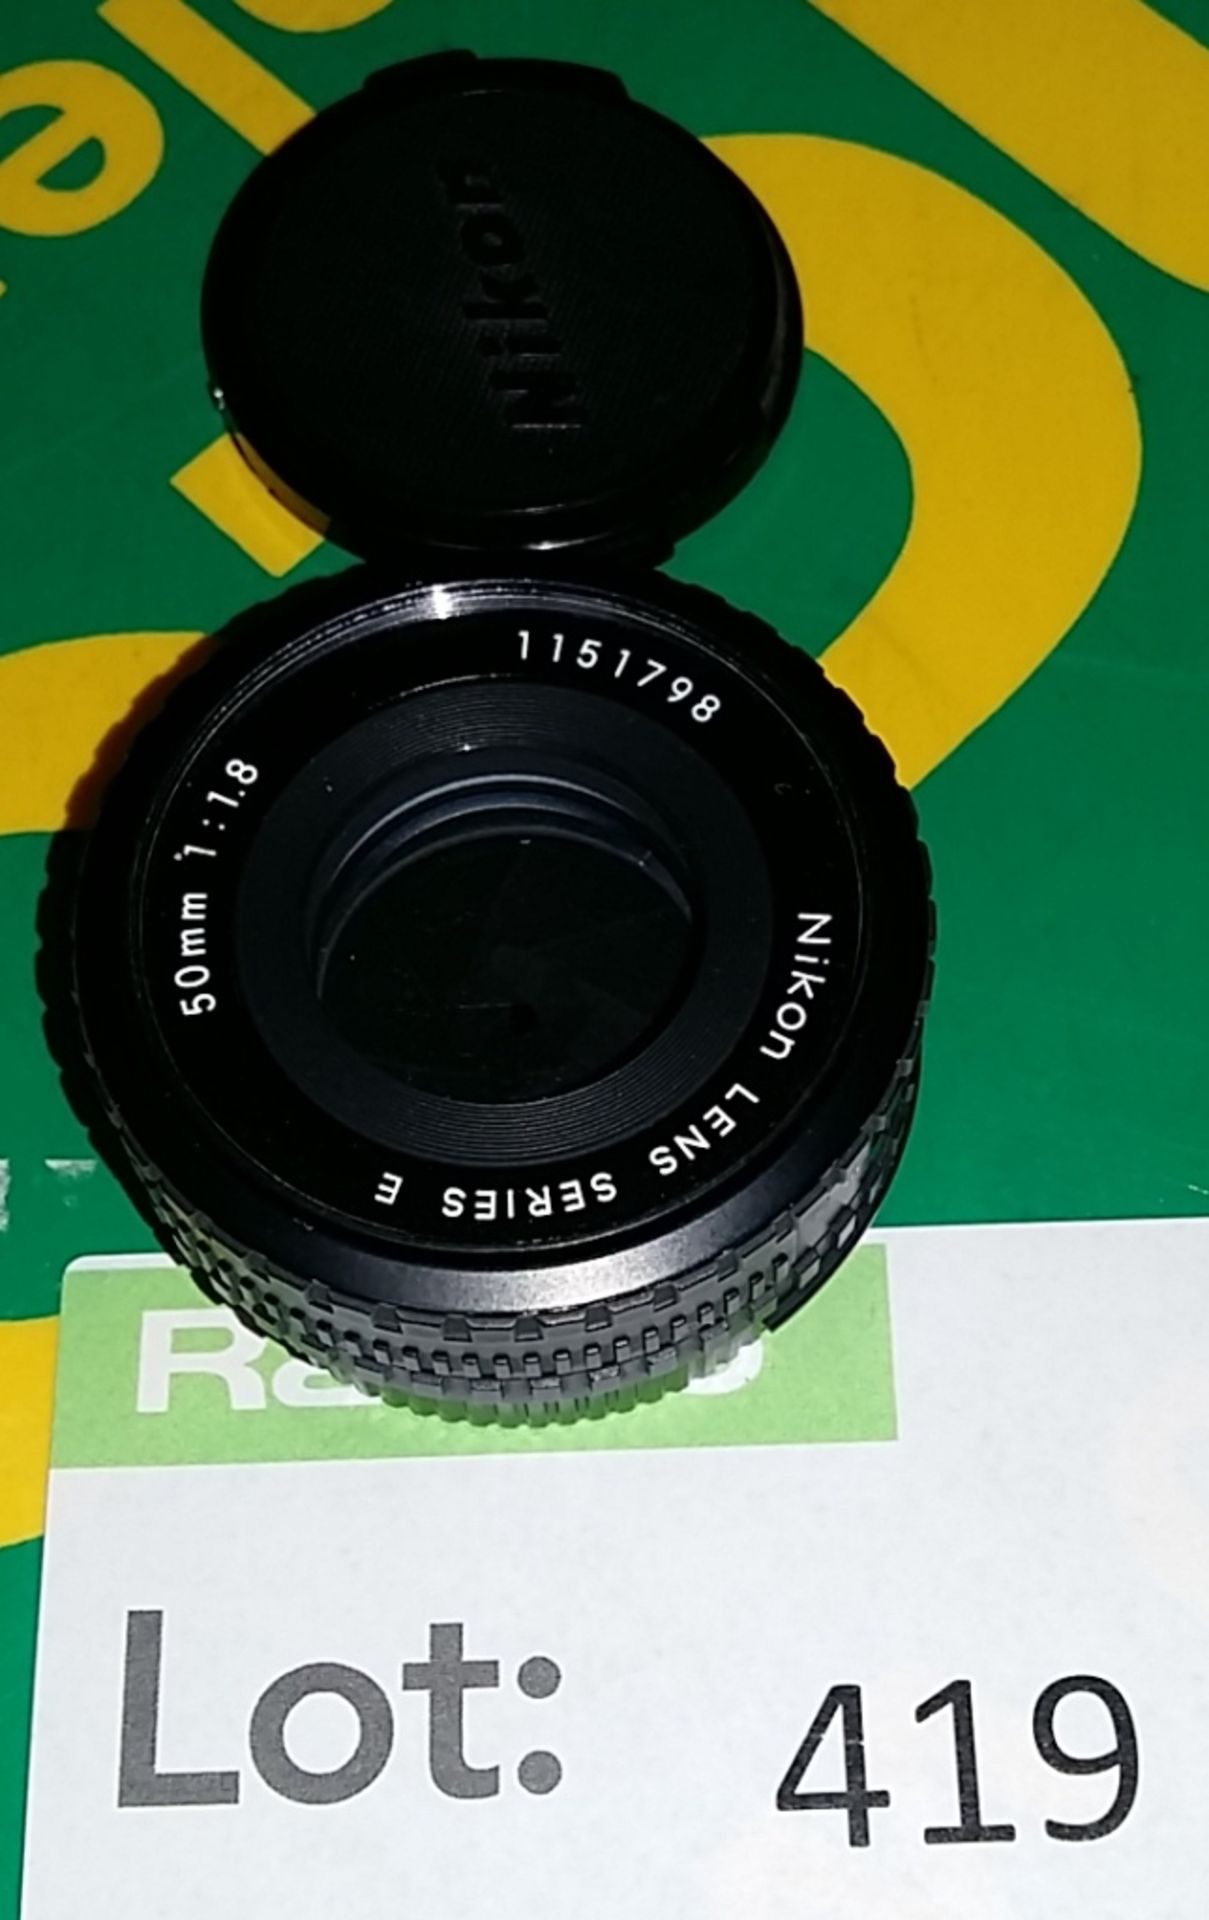 Nikon series E 50mm 1:1.8 series E